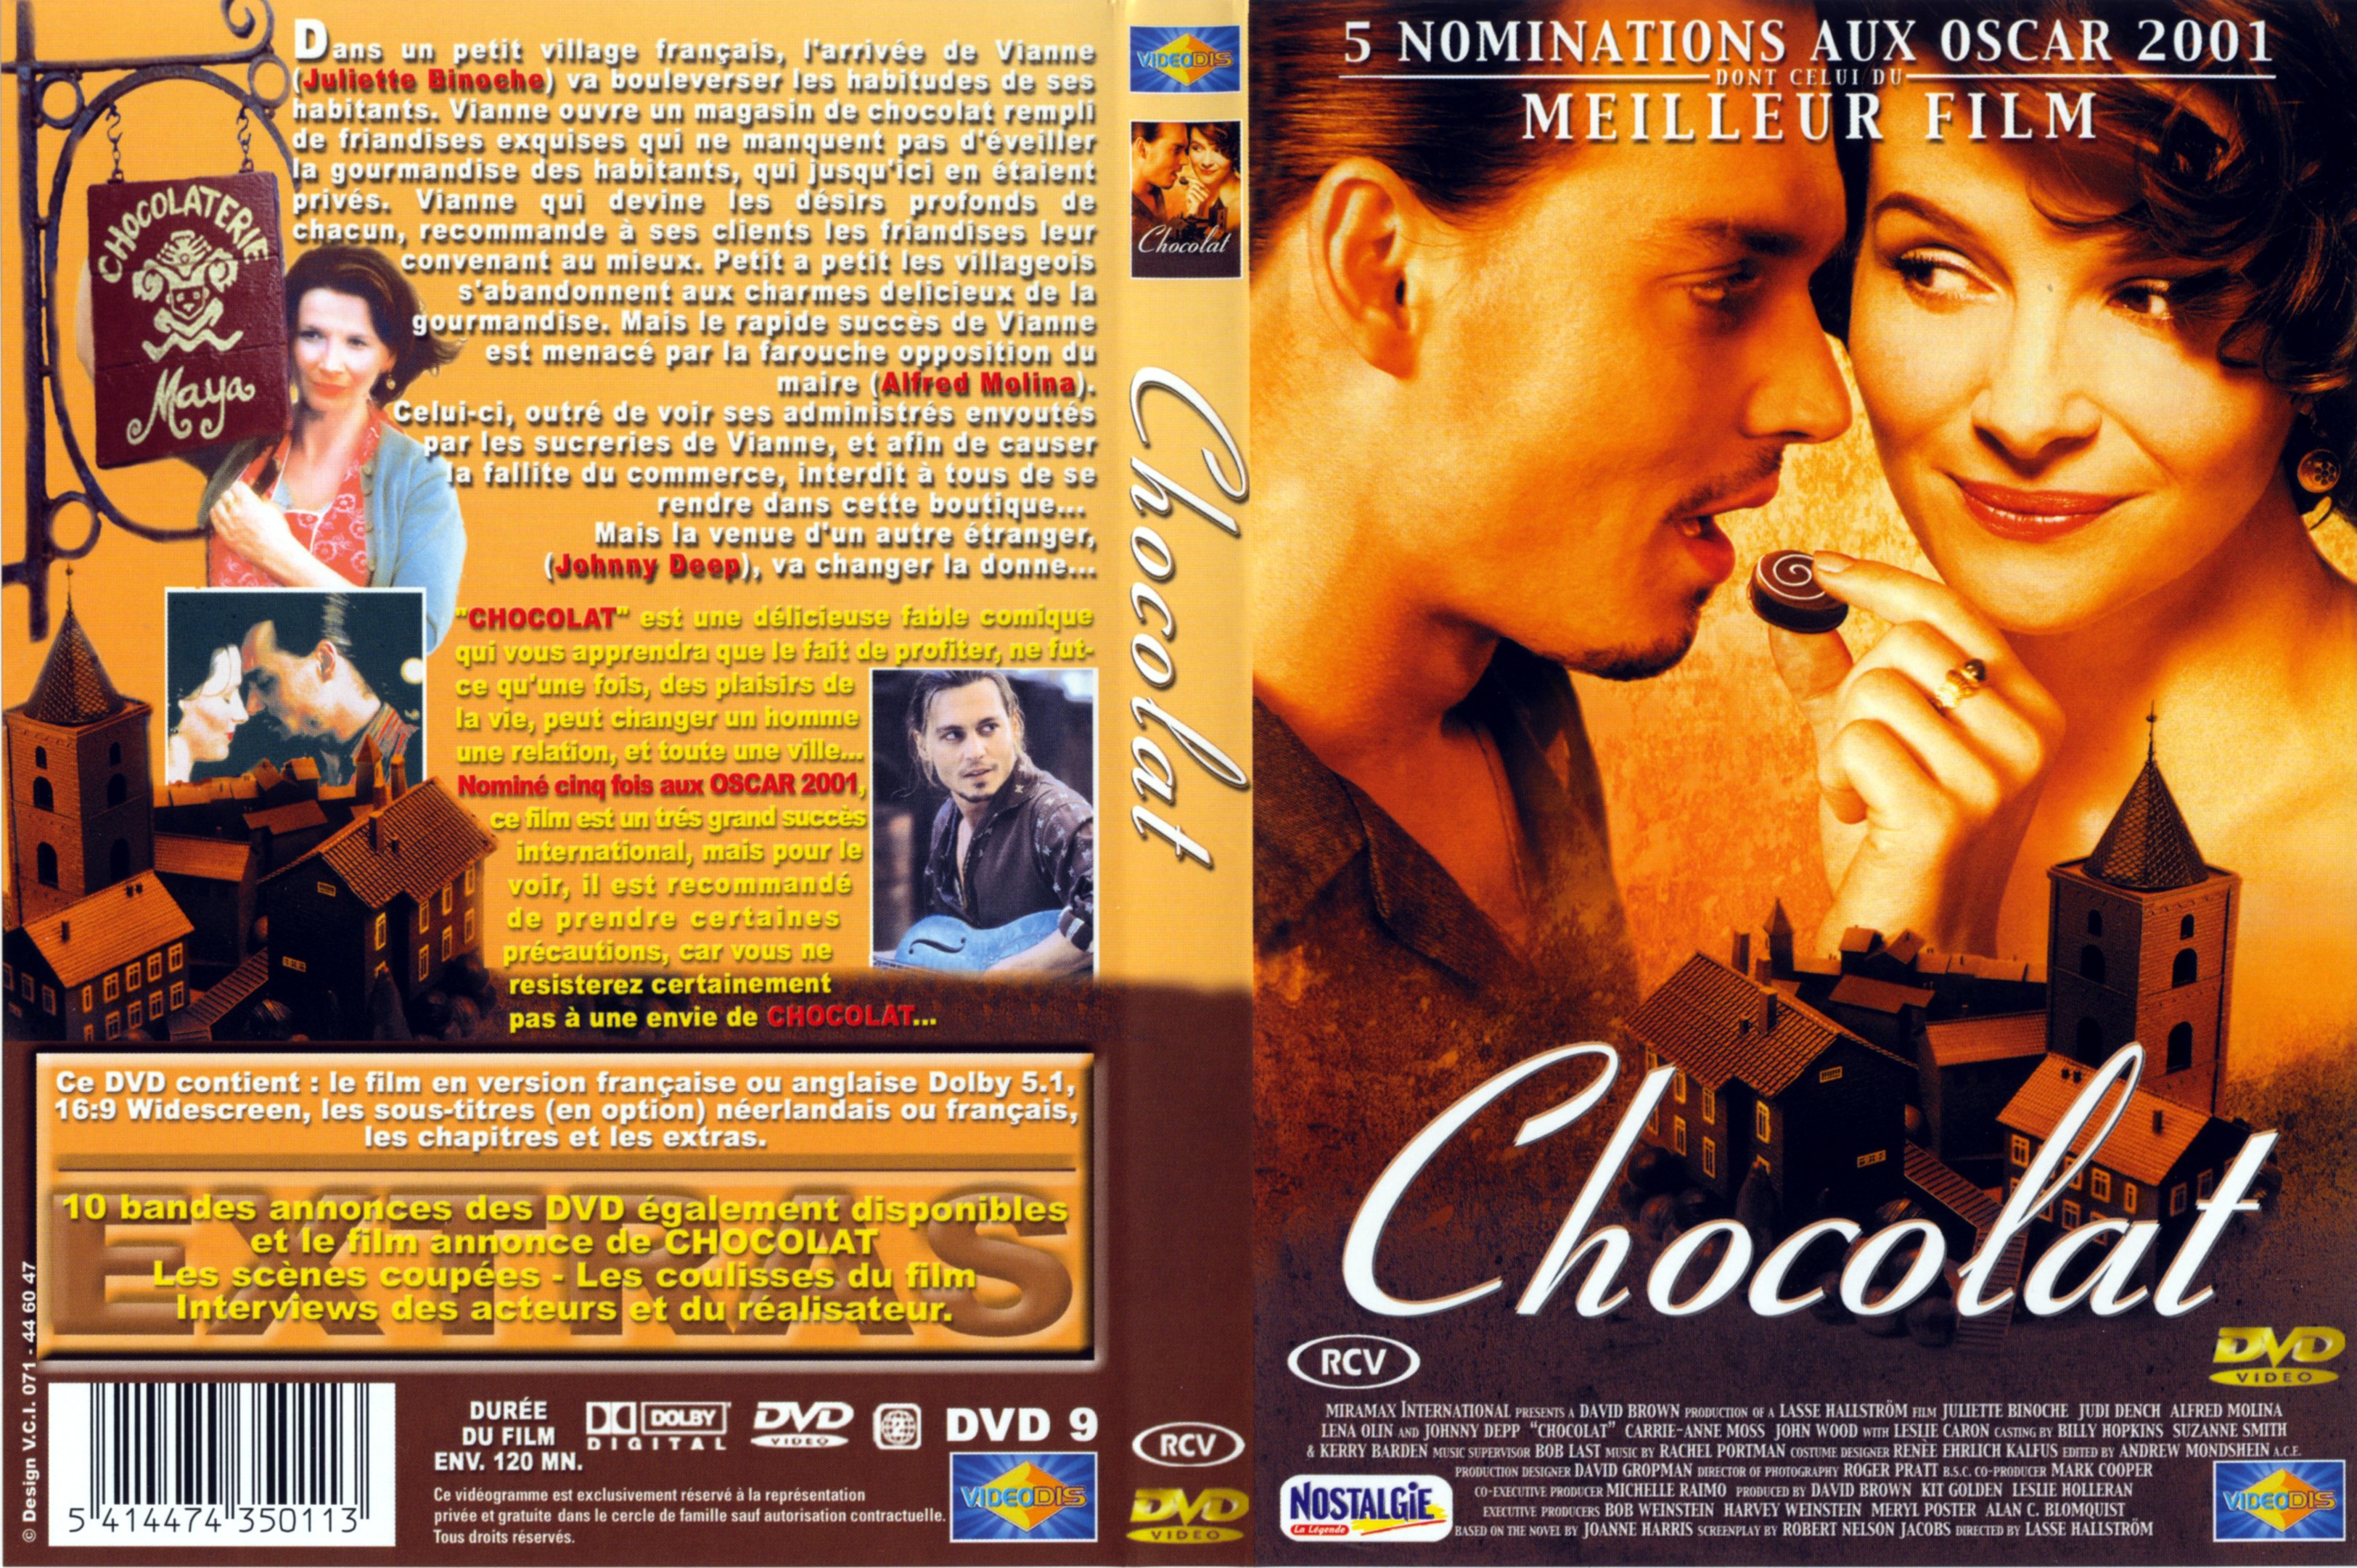 Jaquette DVD Chocolat